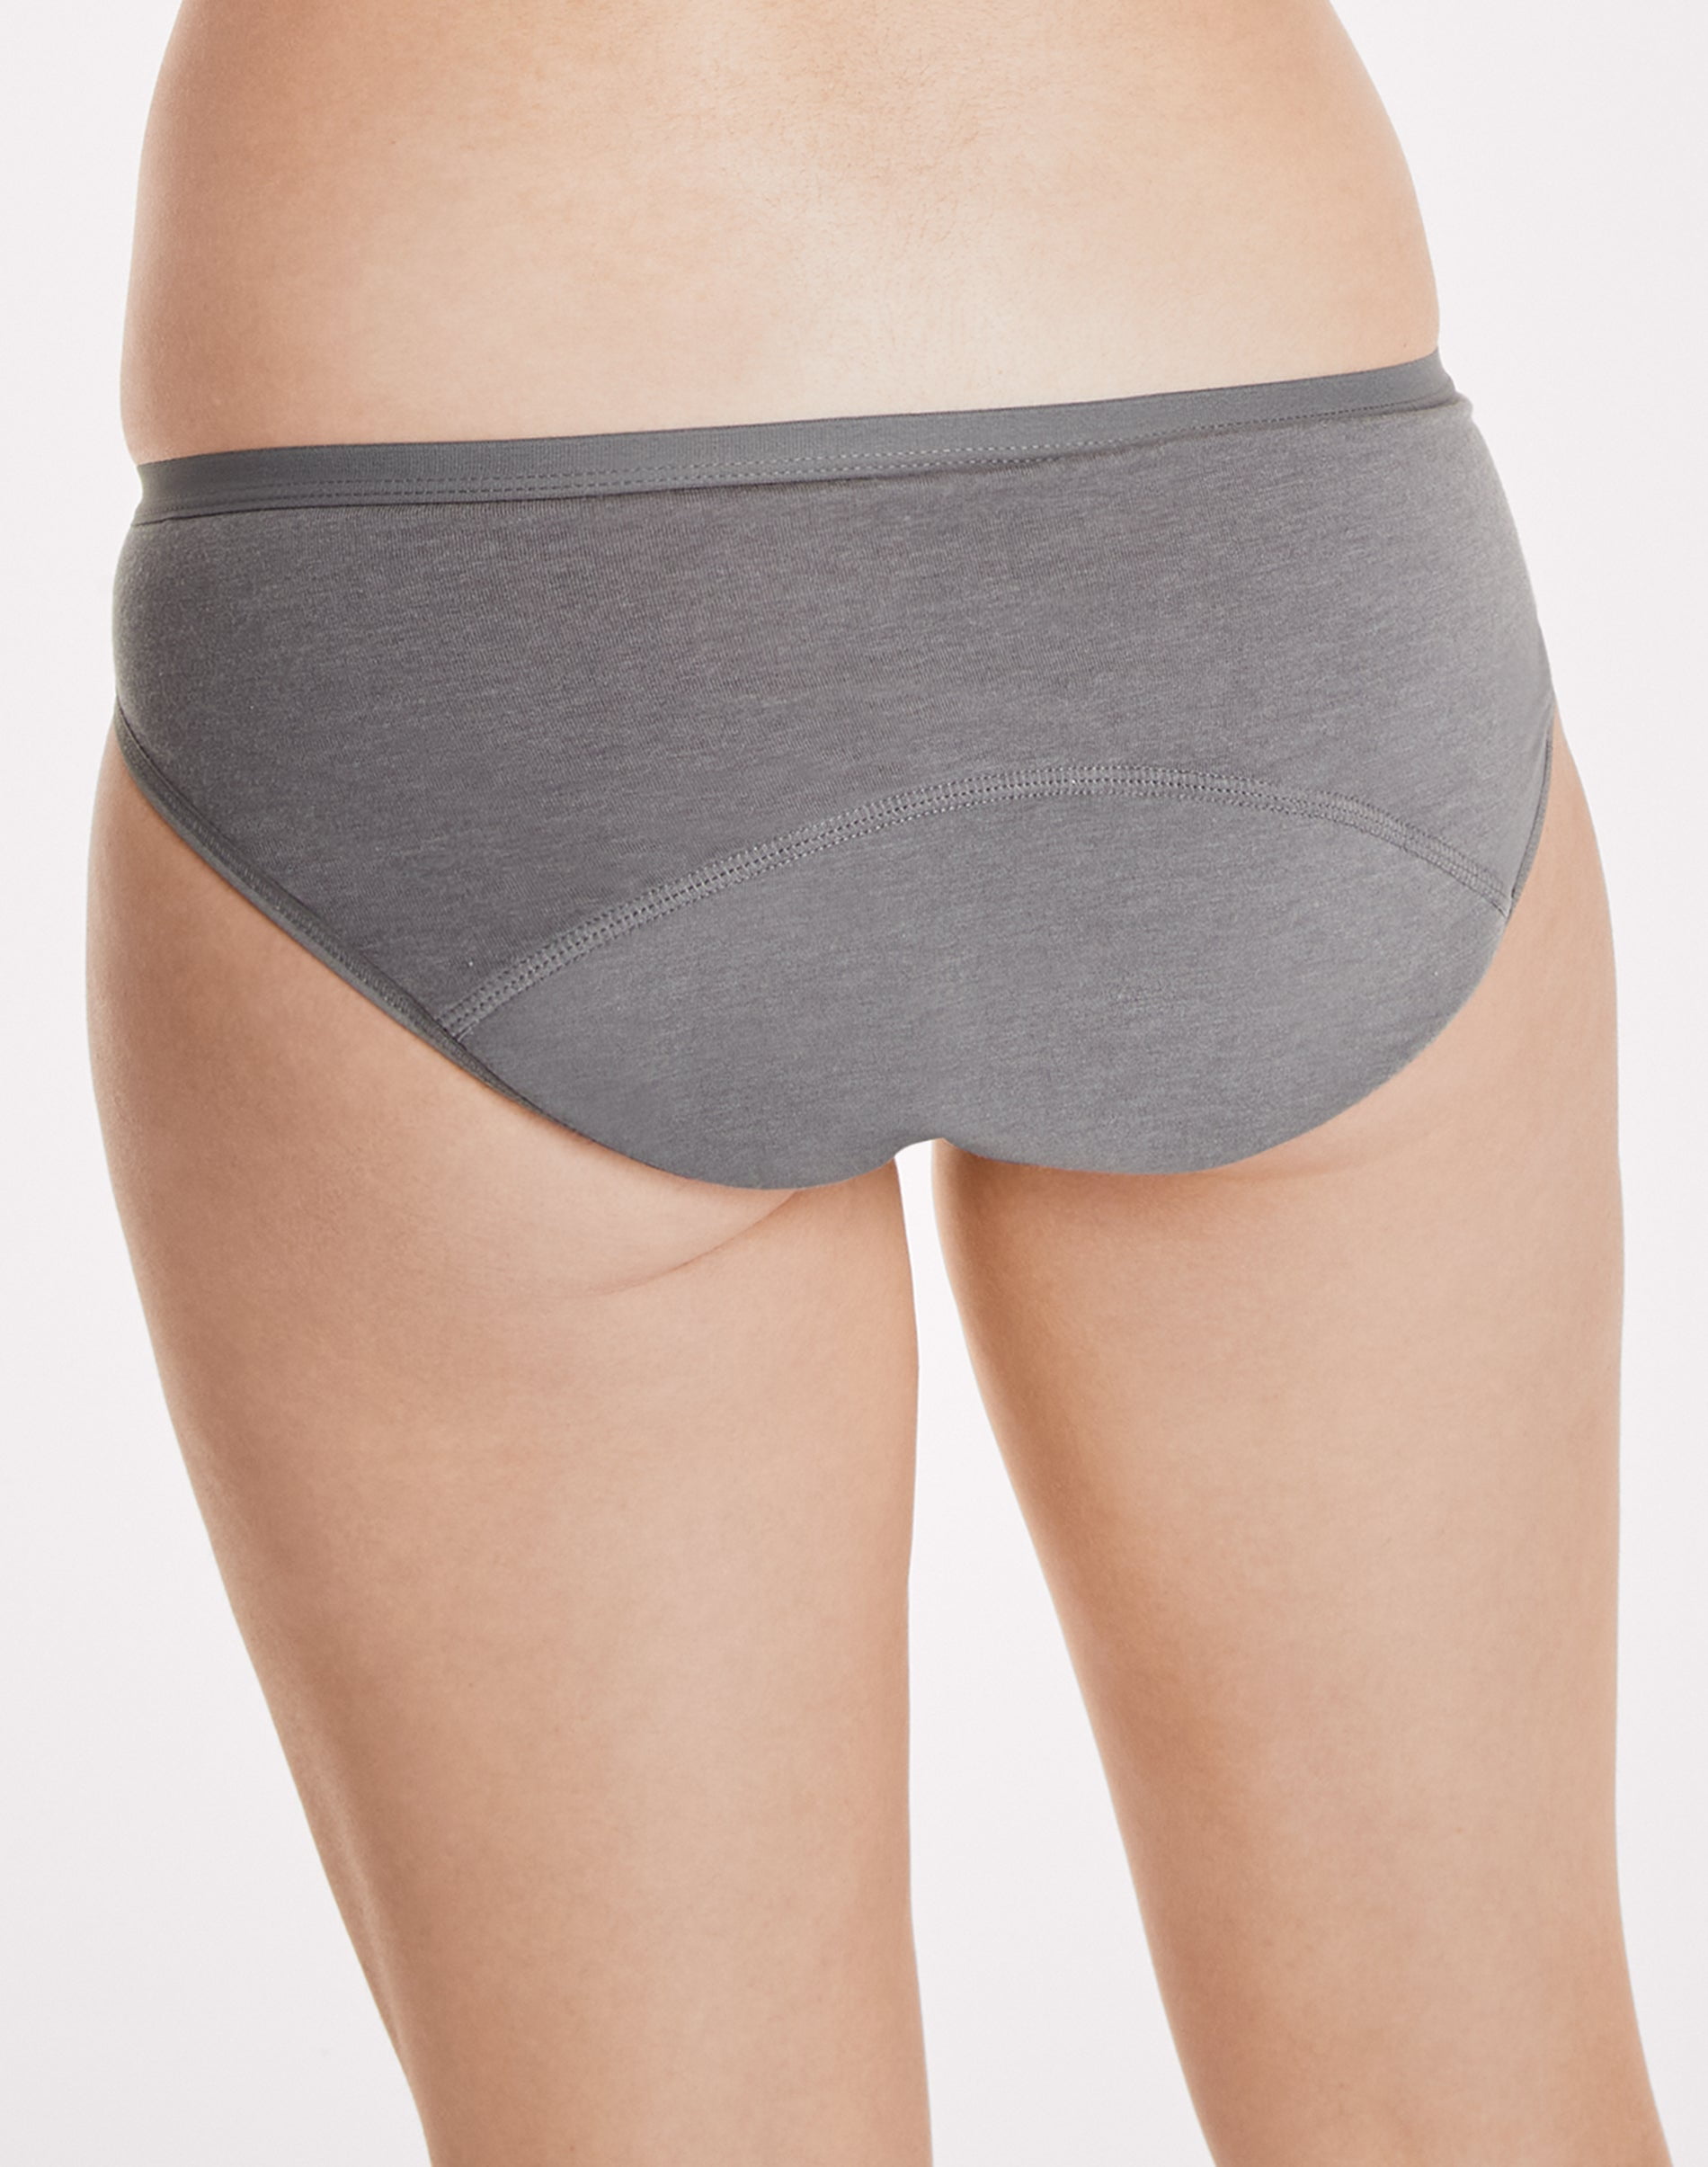 Hanes Comfort, Period. Women's Bikini Underwear, Moderate Leaks, Neutrals,  3-Pack Assorted 8 